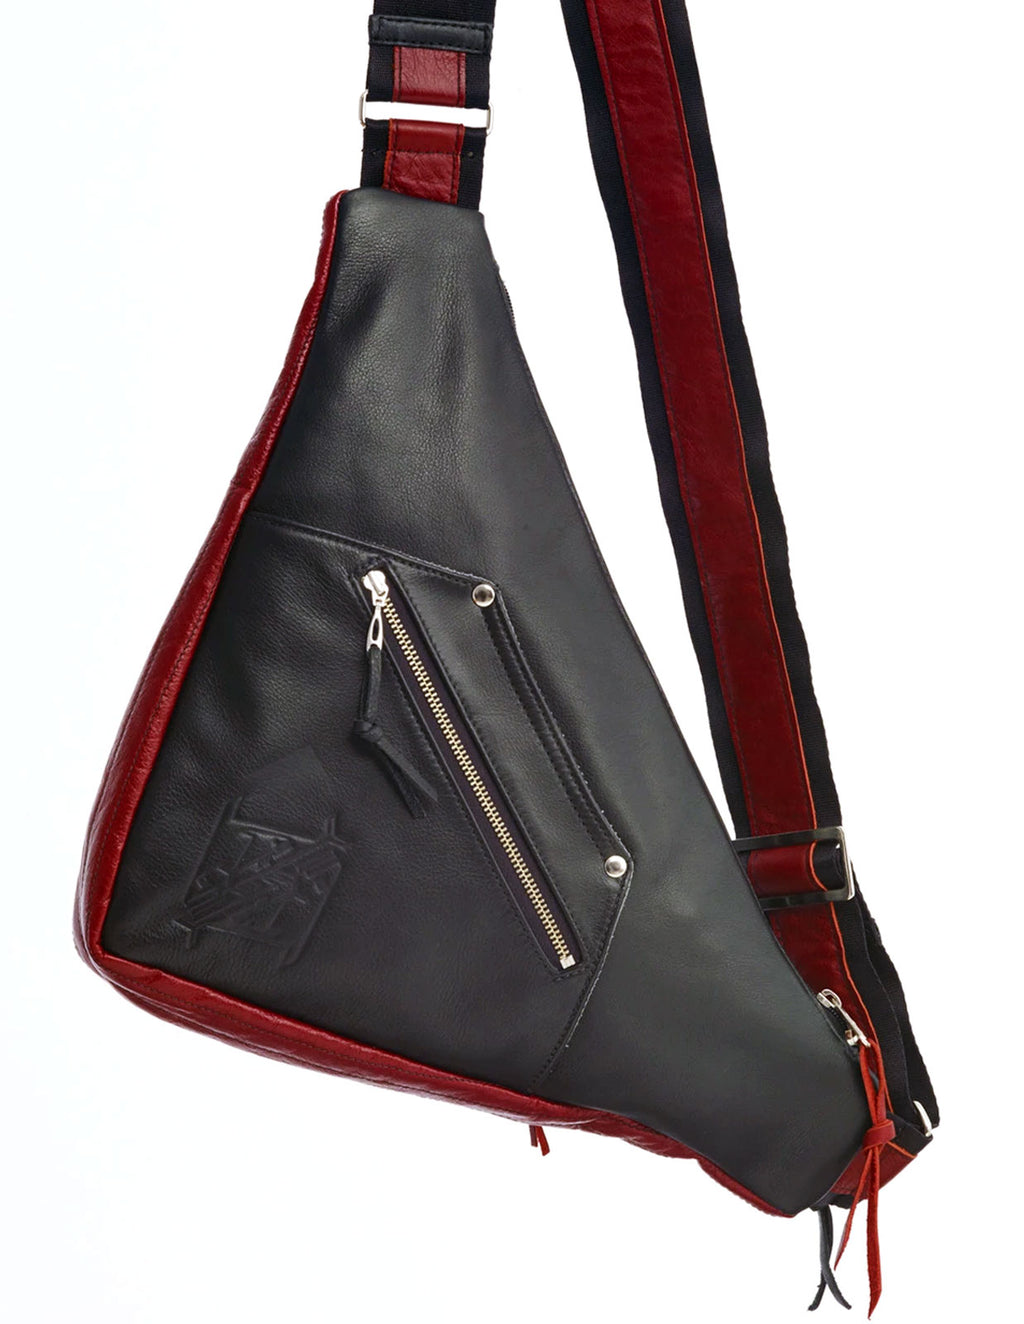 Geometry Bag - Indian Summer's designer leather purses